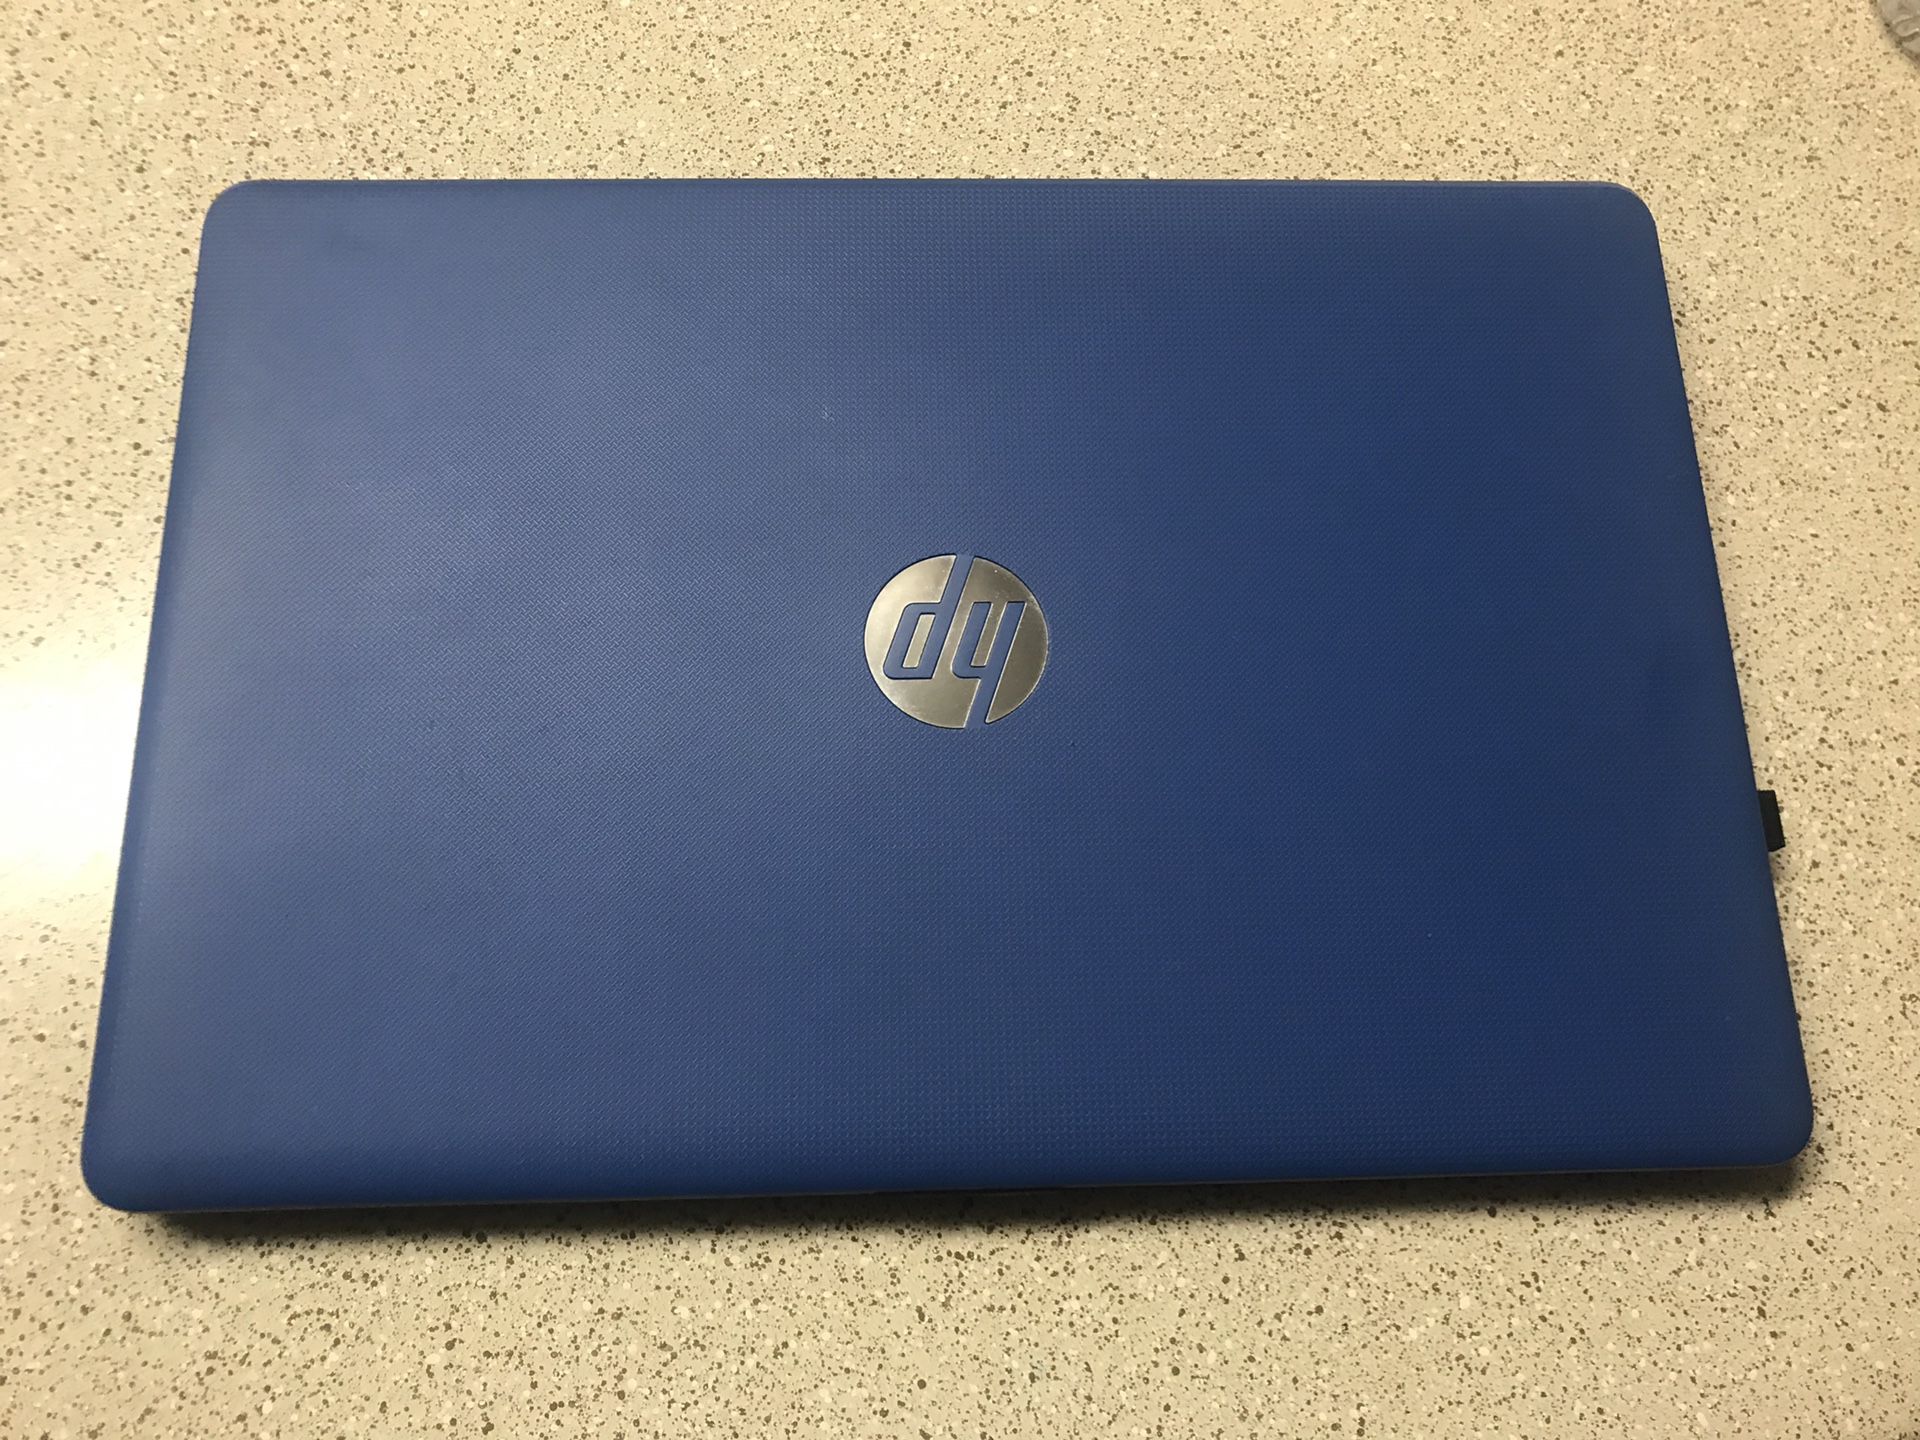 HP laptop model: 15-bw033wm